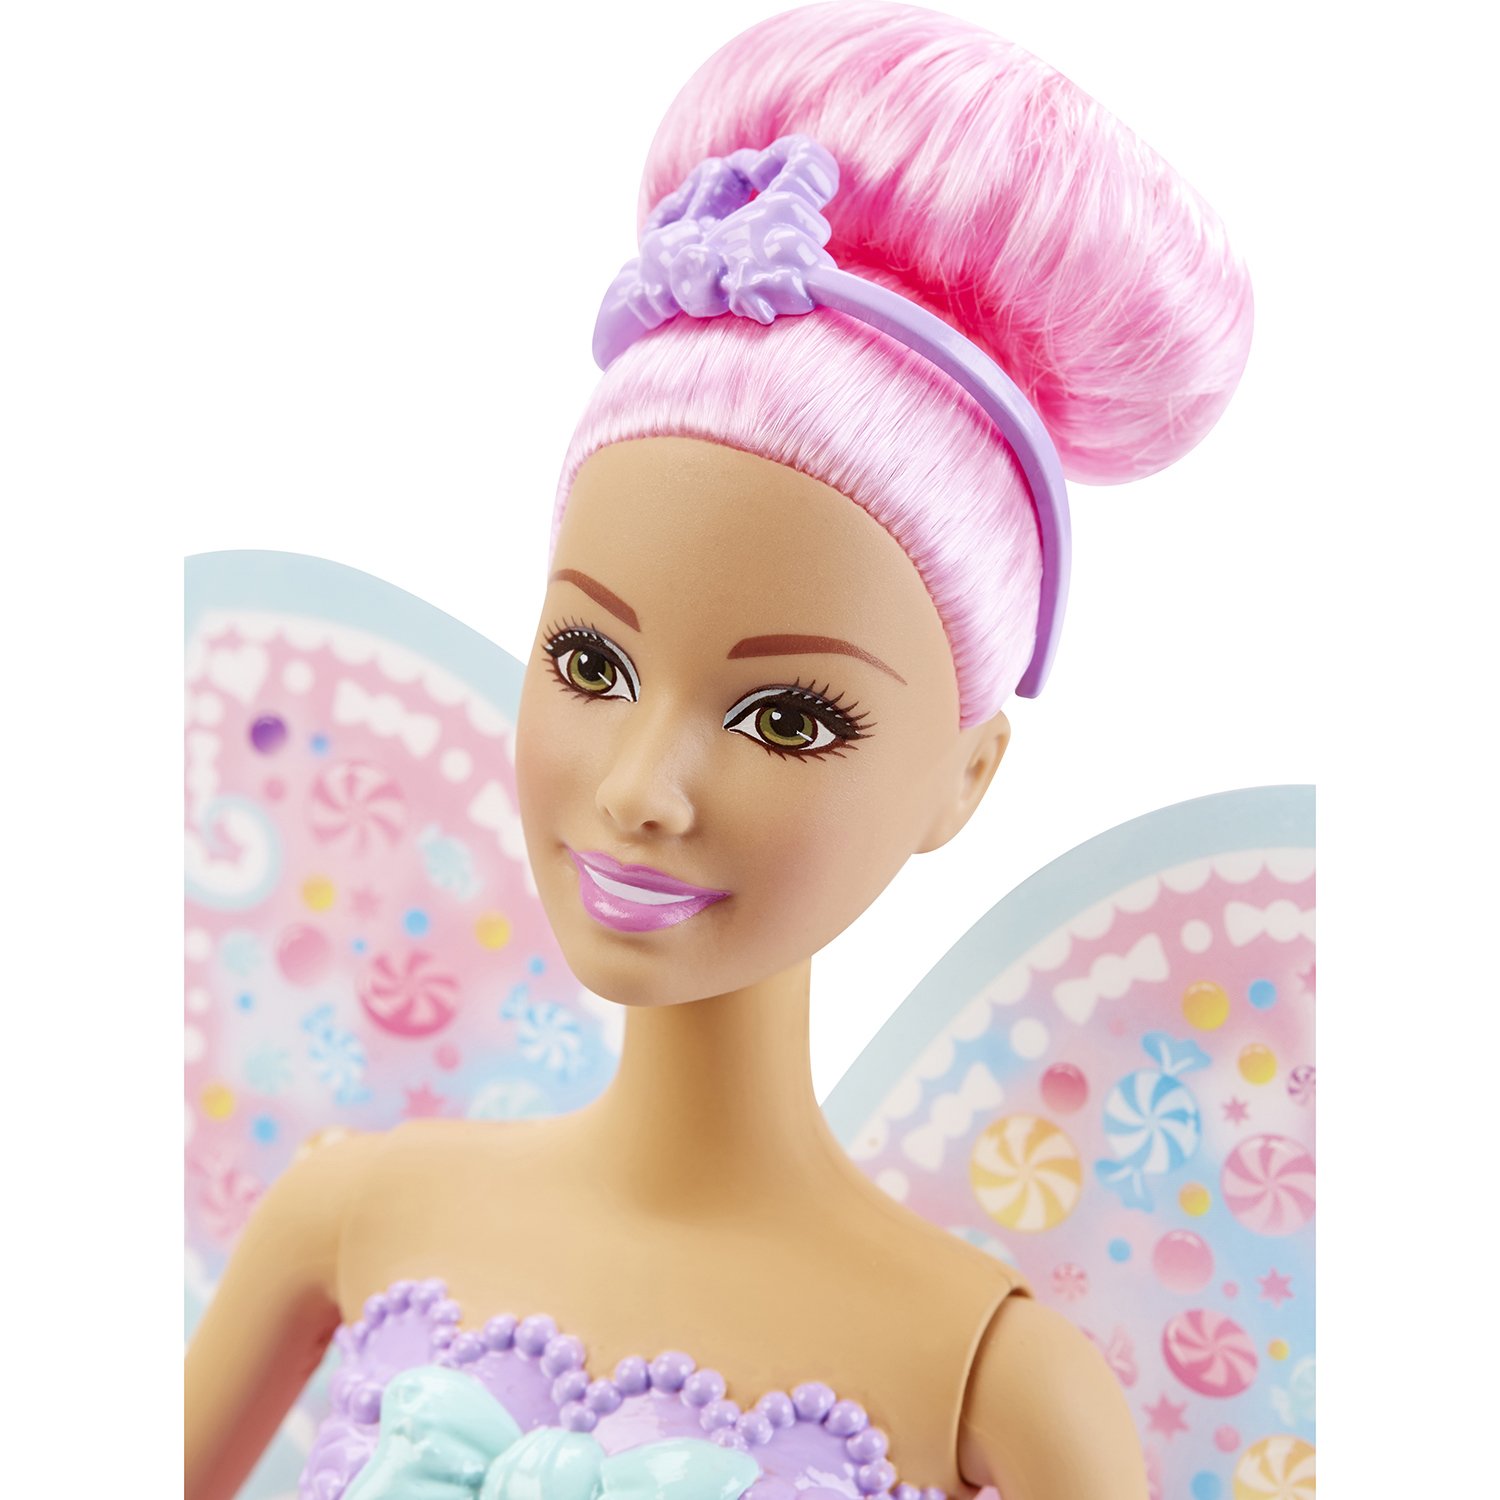 Кукла Barbie Фея Королевства конфет, 29 см, DHM51